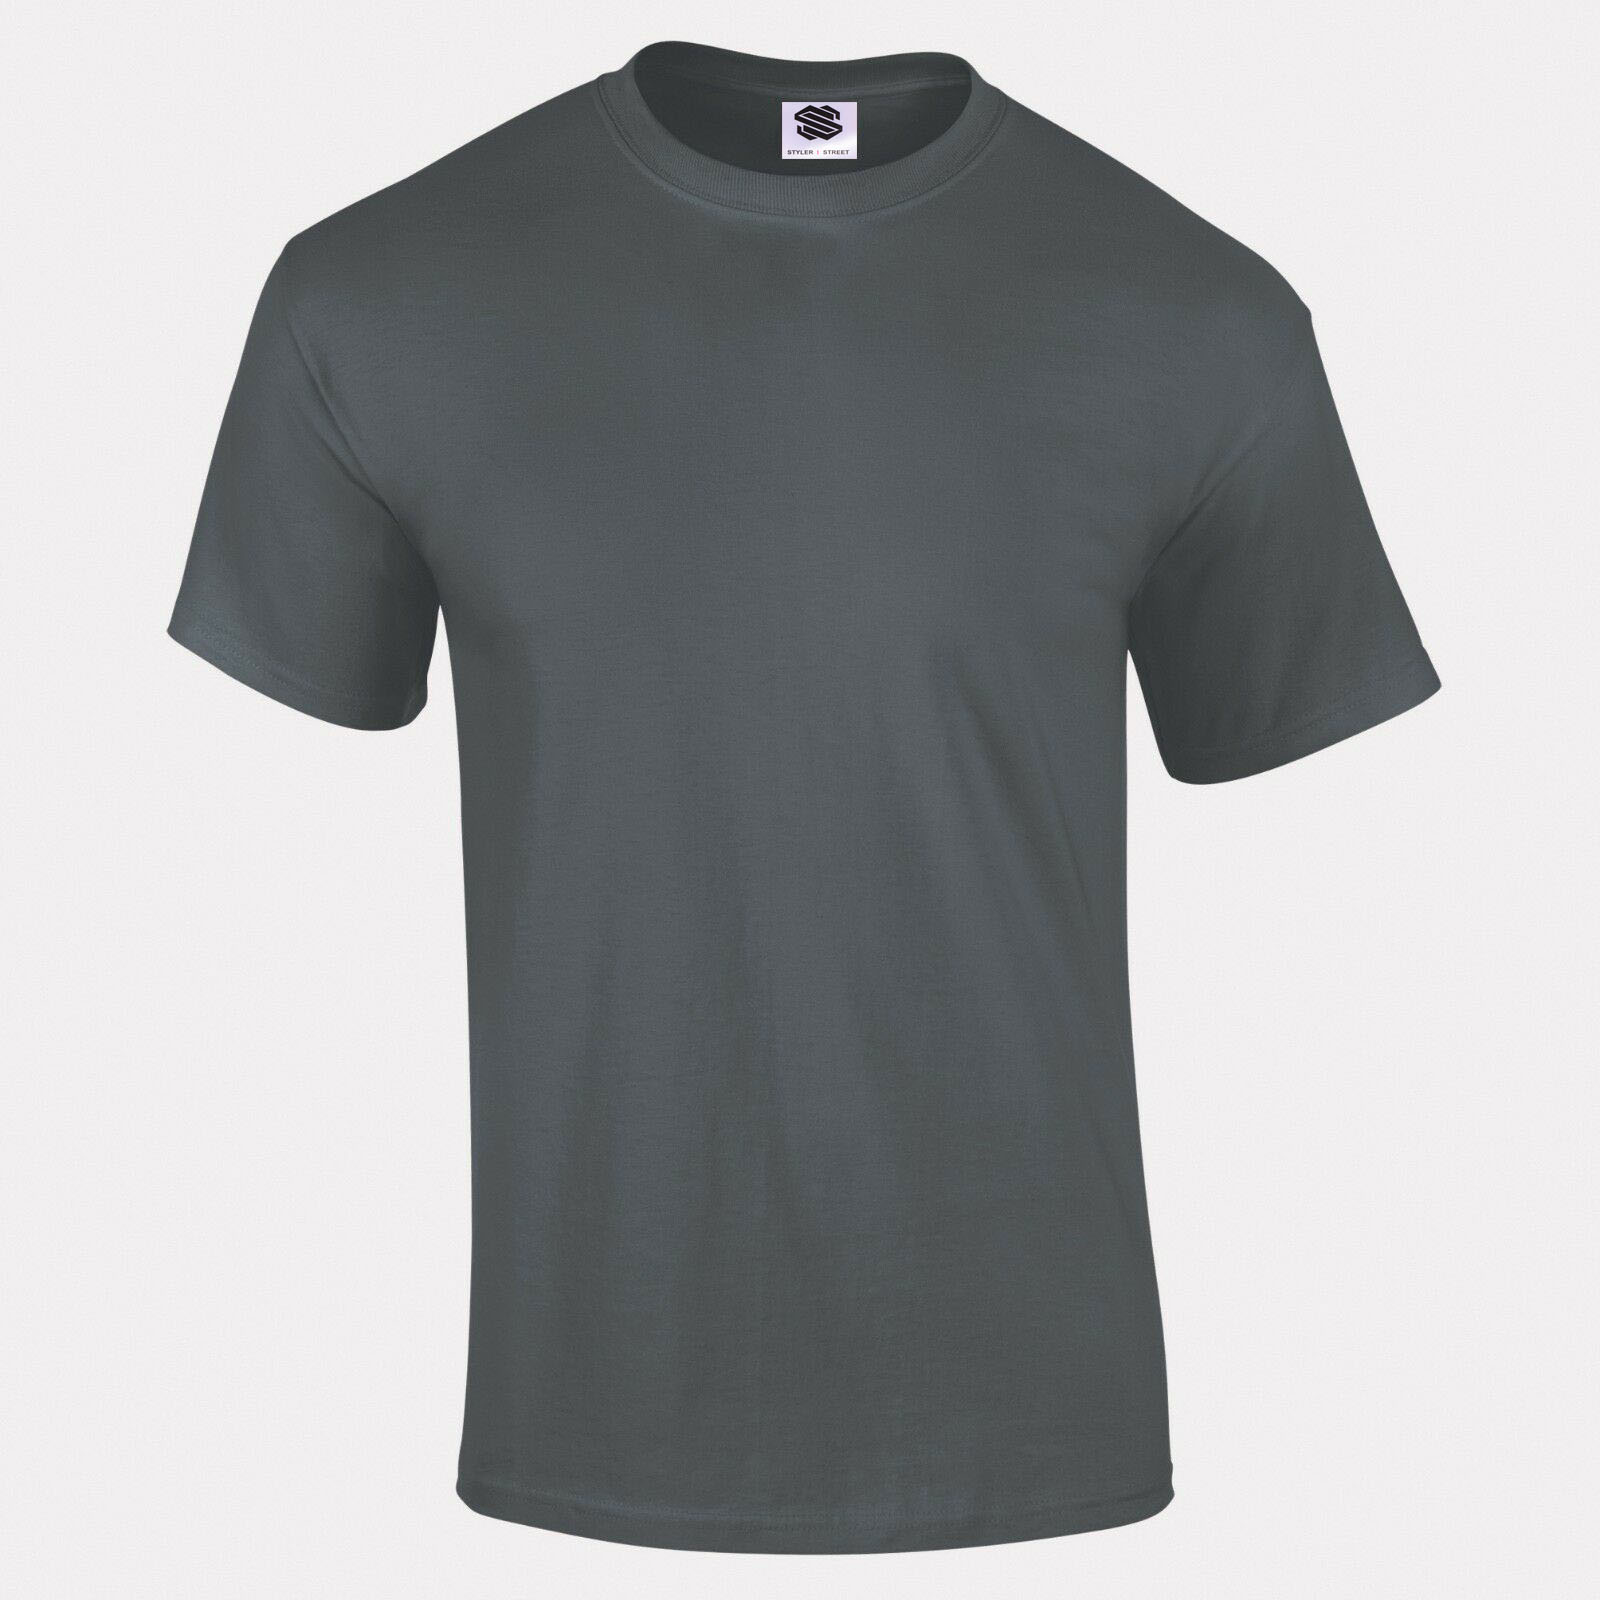 Mens Plain T Shirt 100% Cotton 1 PC Short Sleeves Soft Crew Neck Tee ...